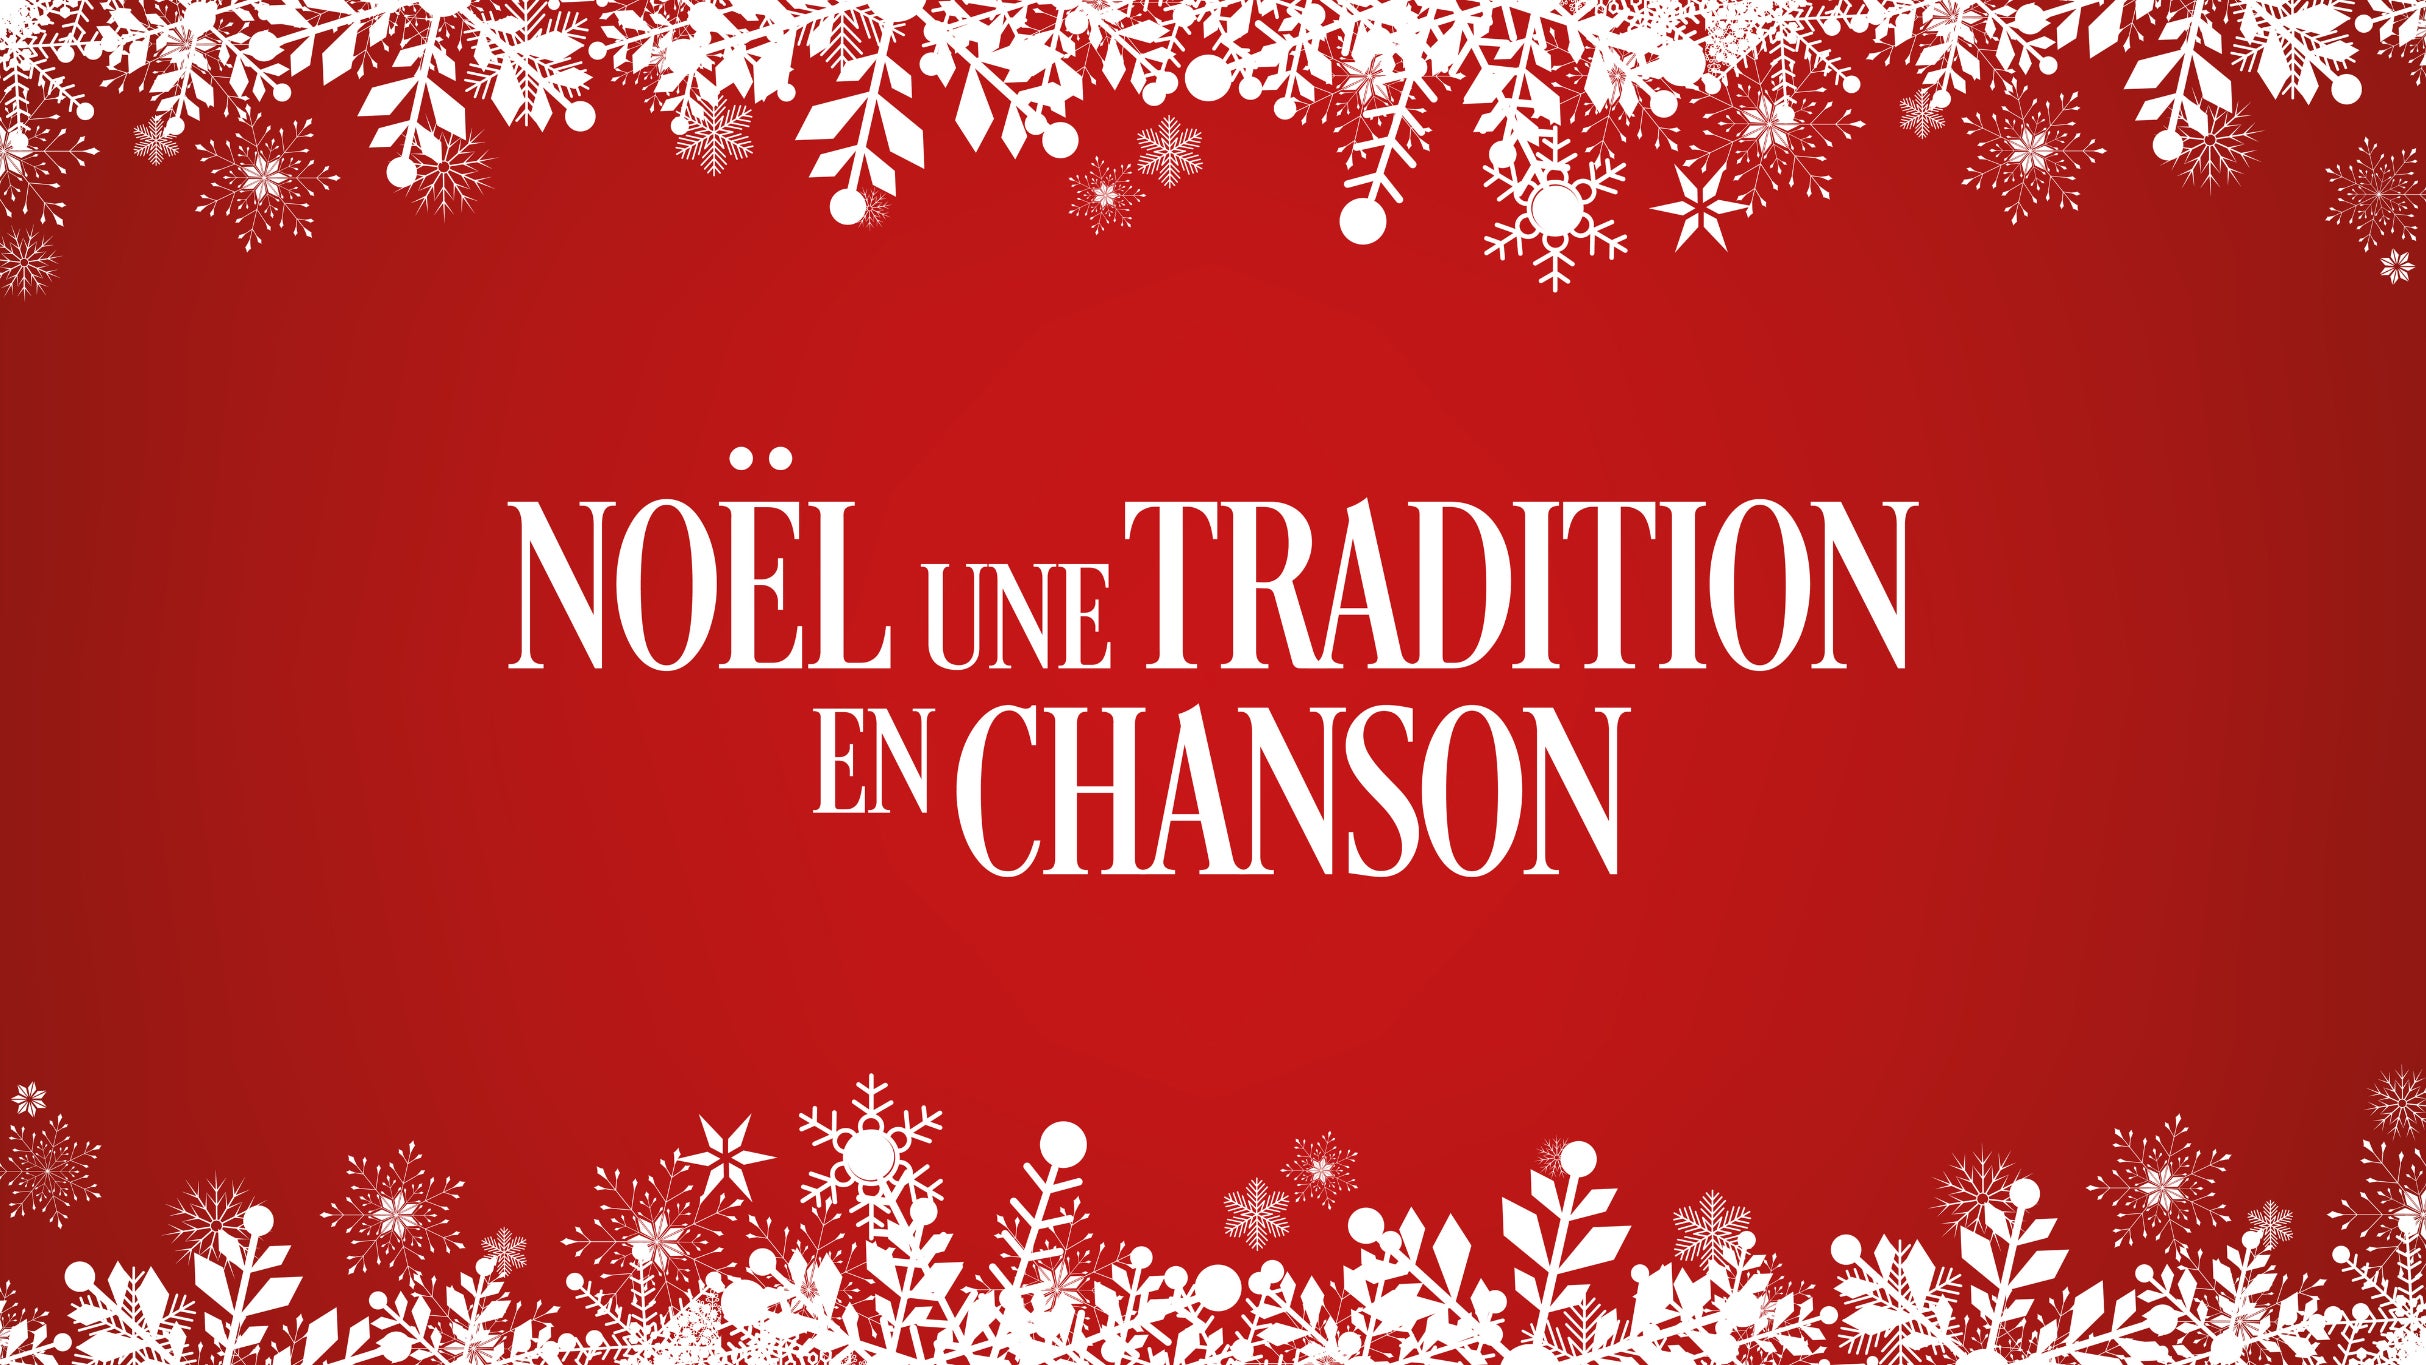 Noël, Une Tradition En Chanson in Brossard promo photo for Prévente Théâtre Manuvie presale offer code